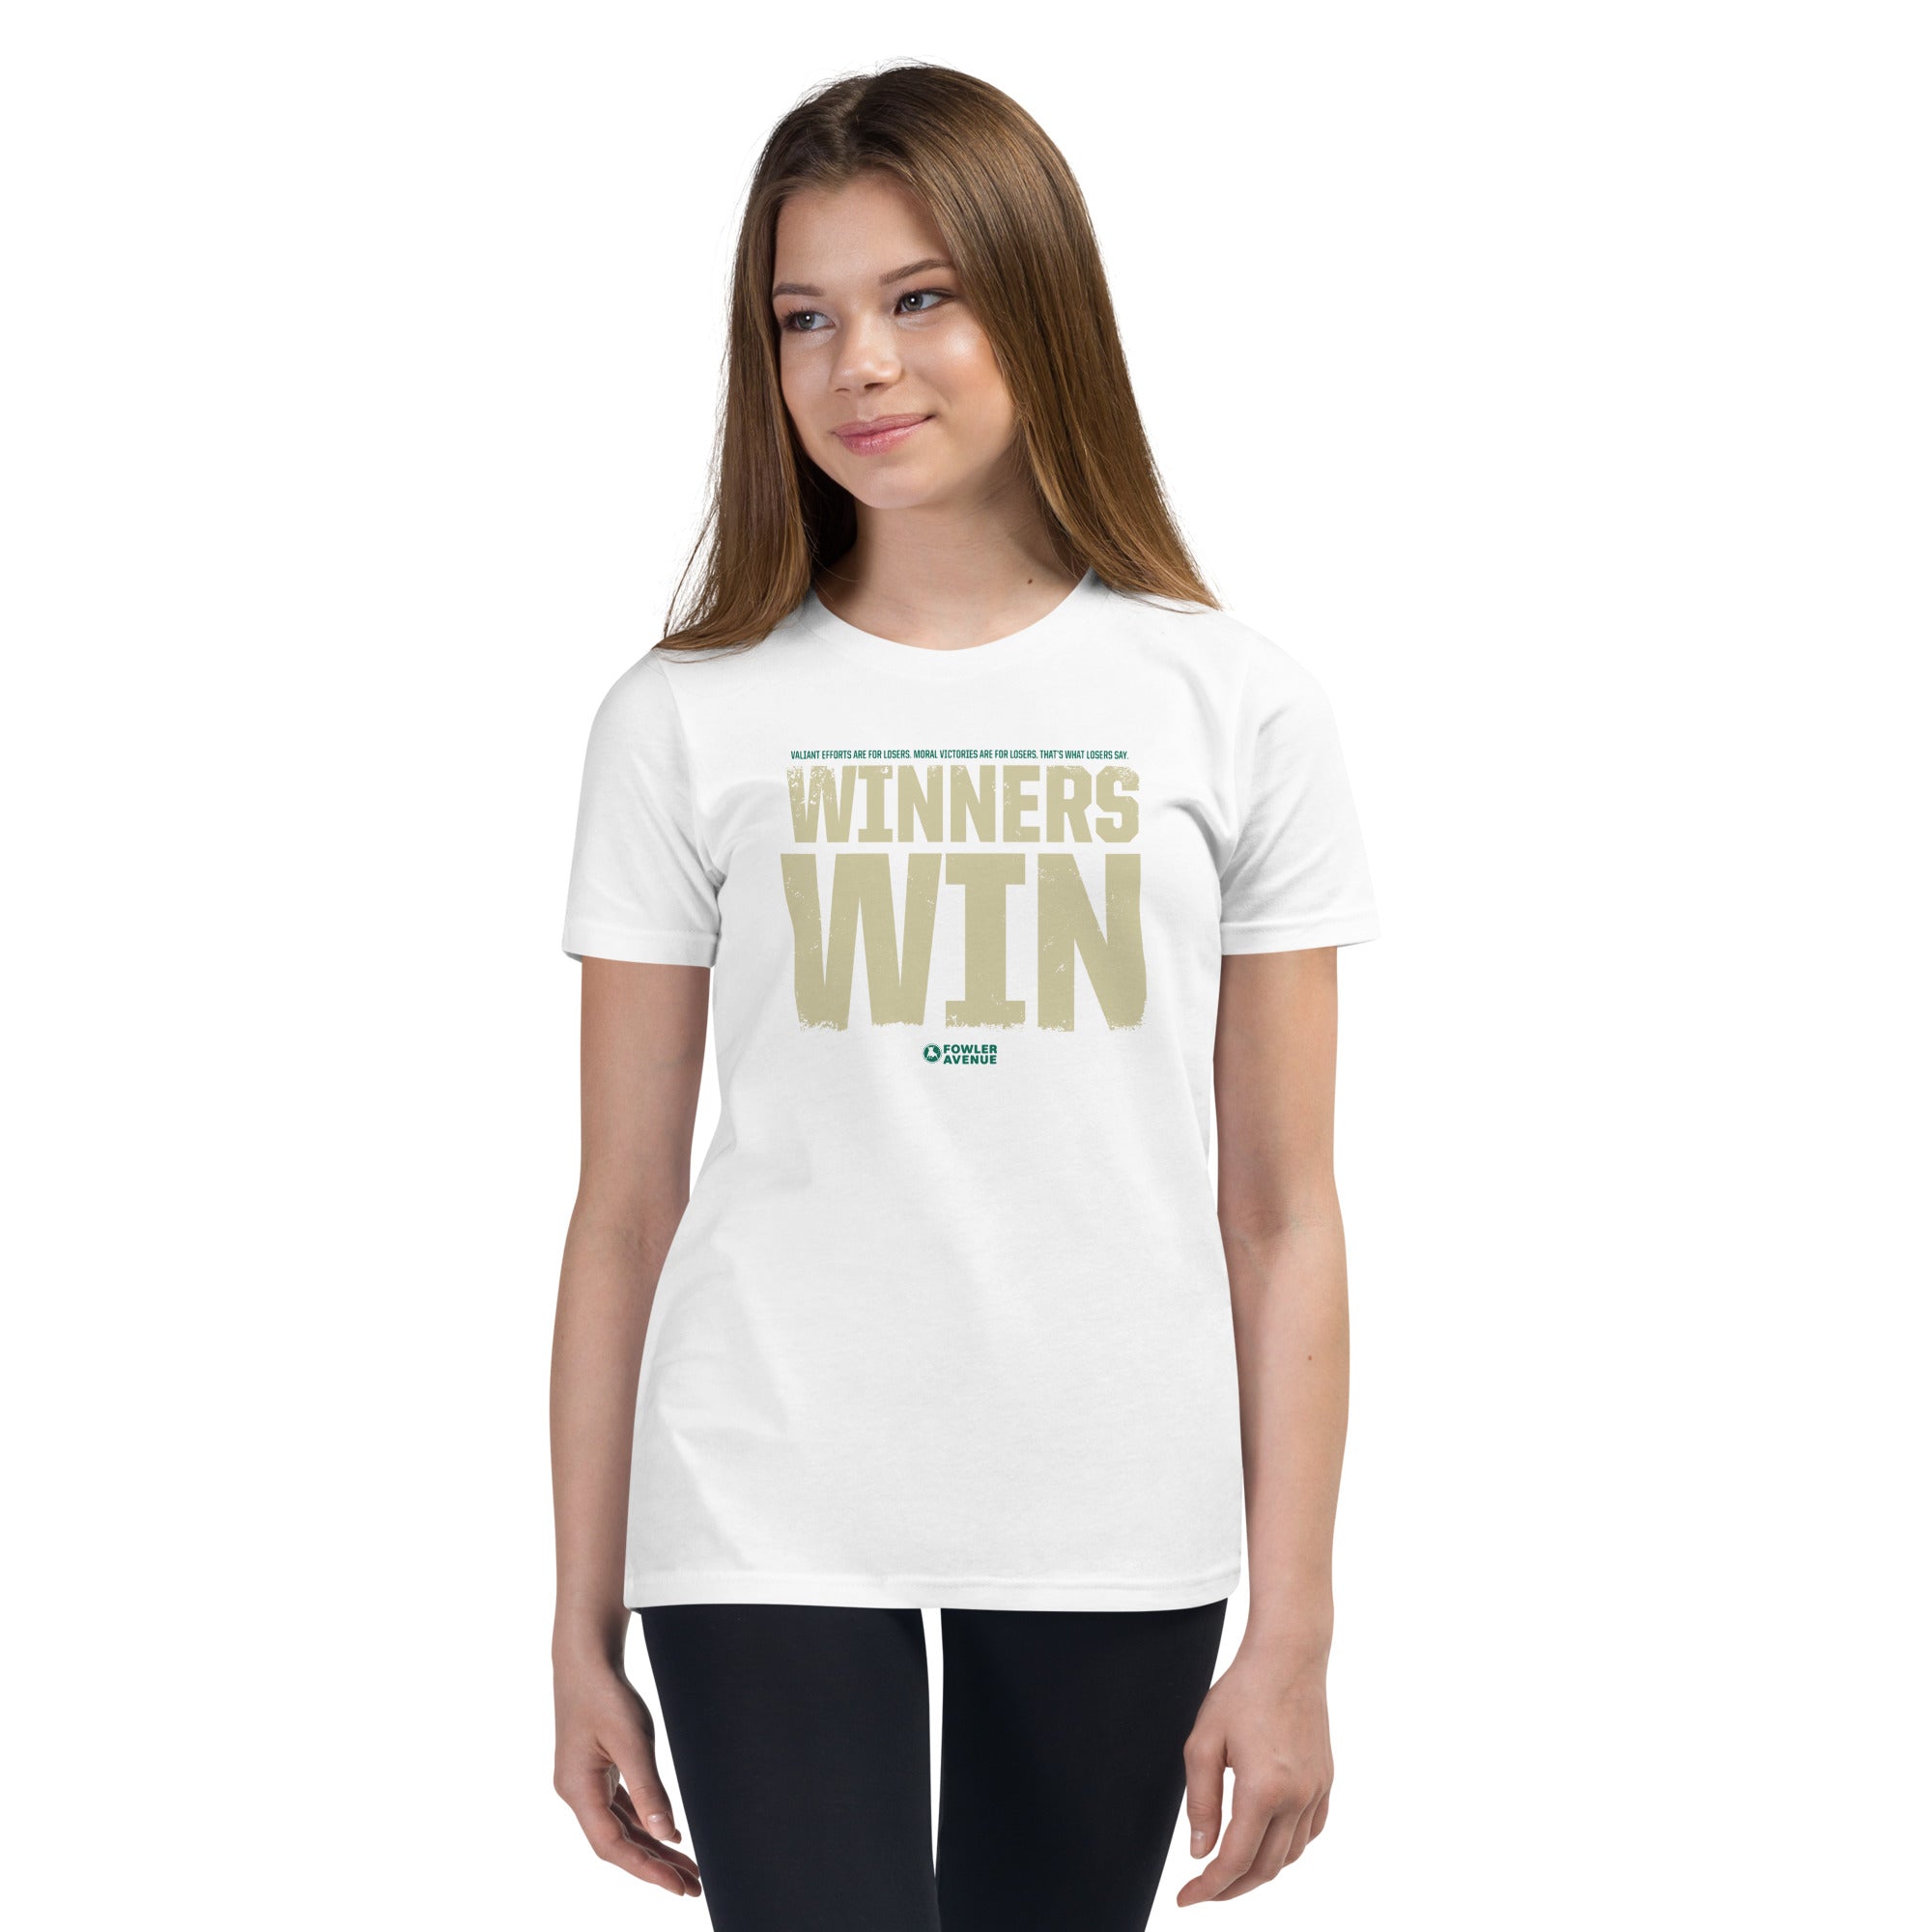 Winners Win - Youth Short Sleeve T-Shirt